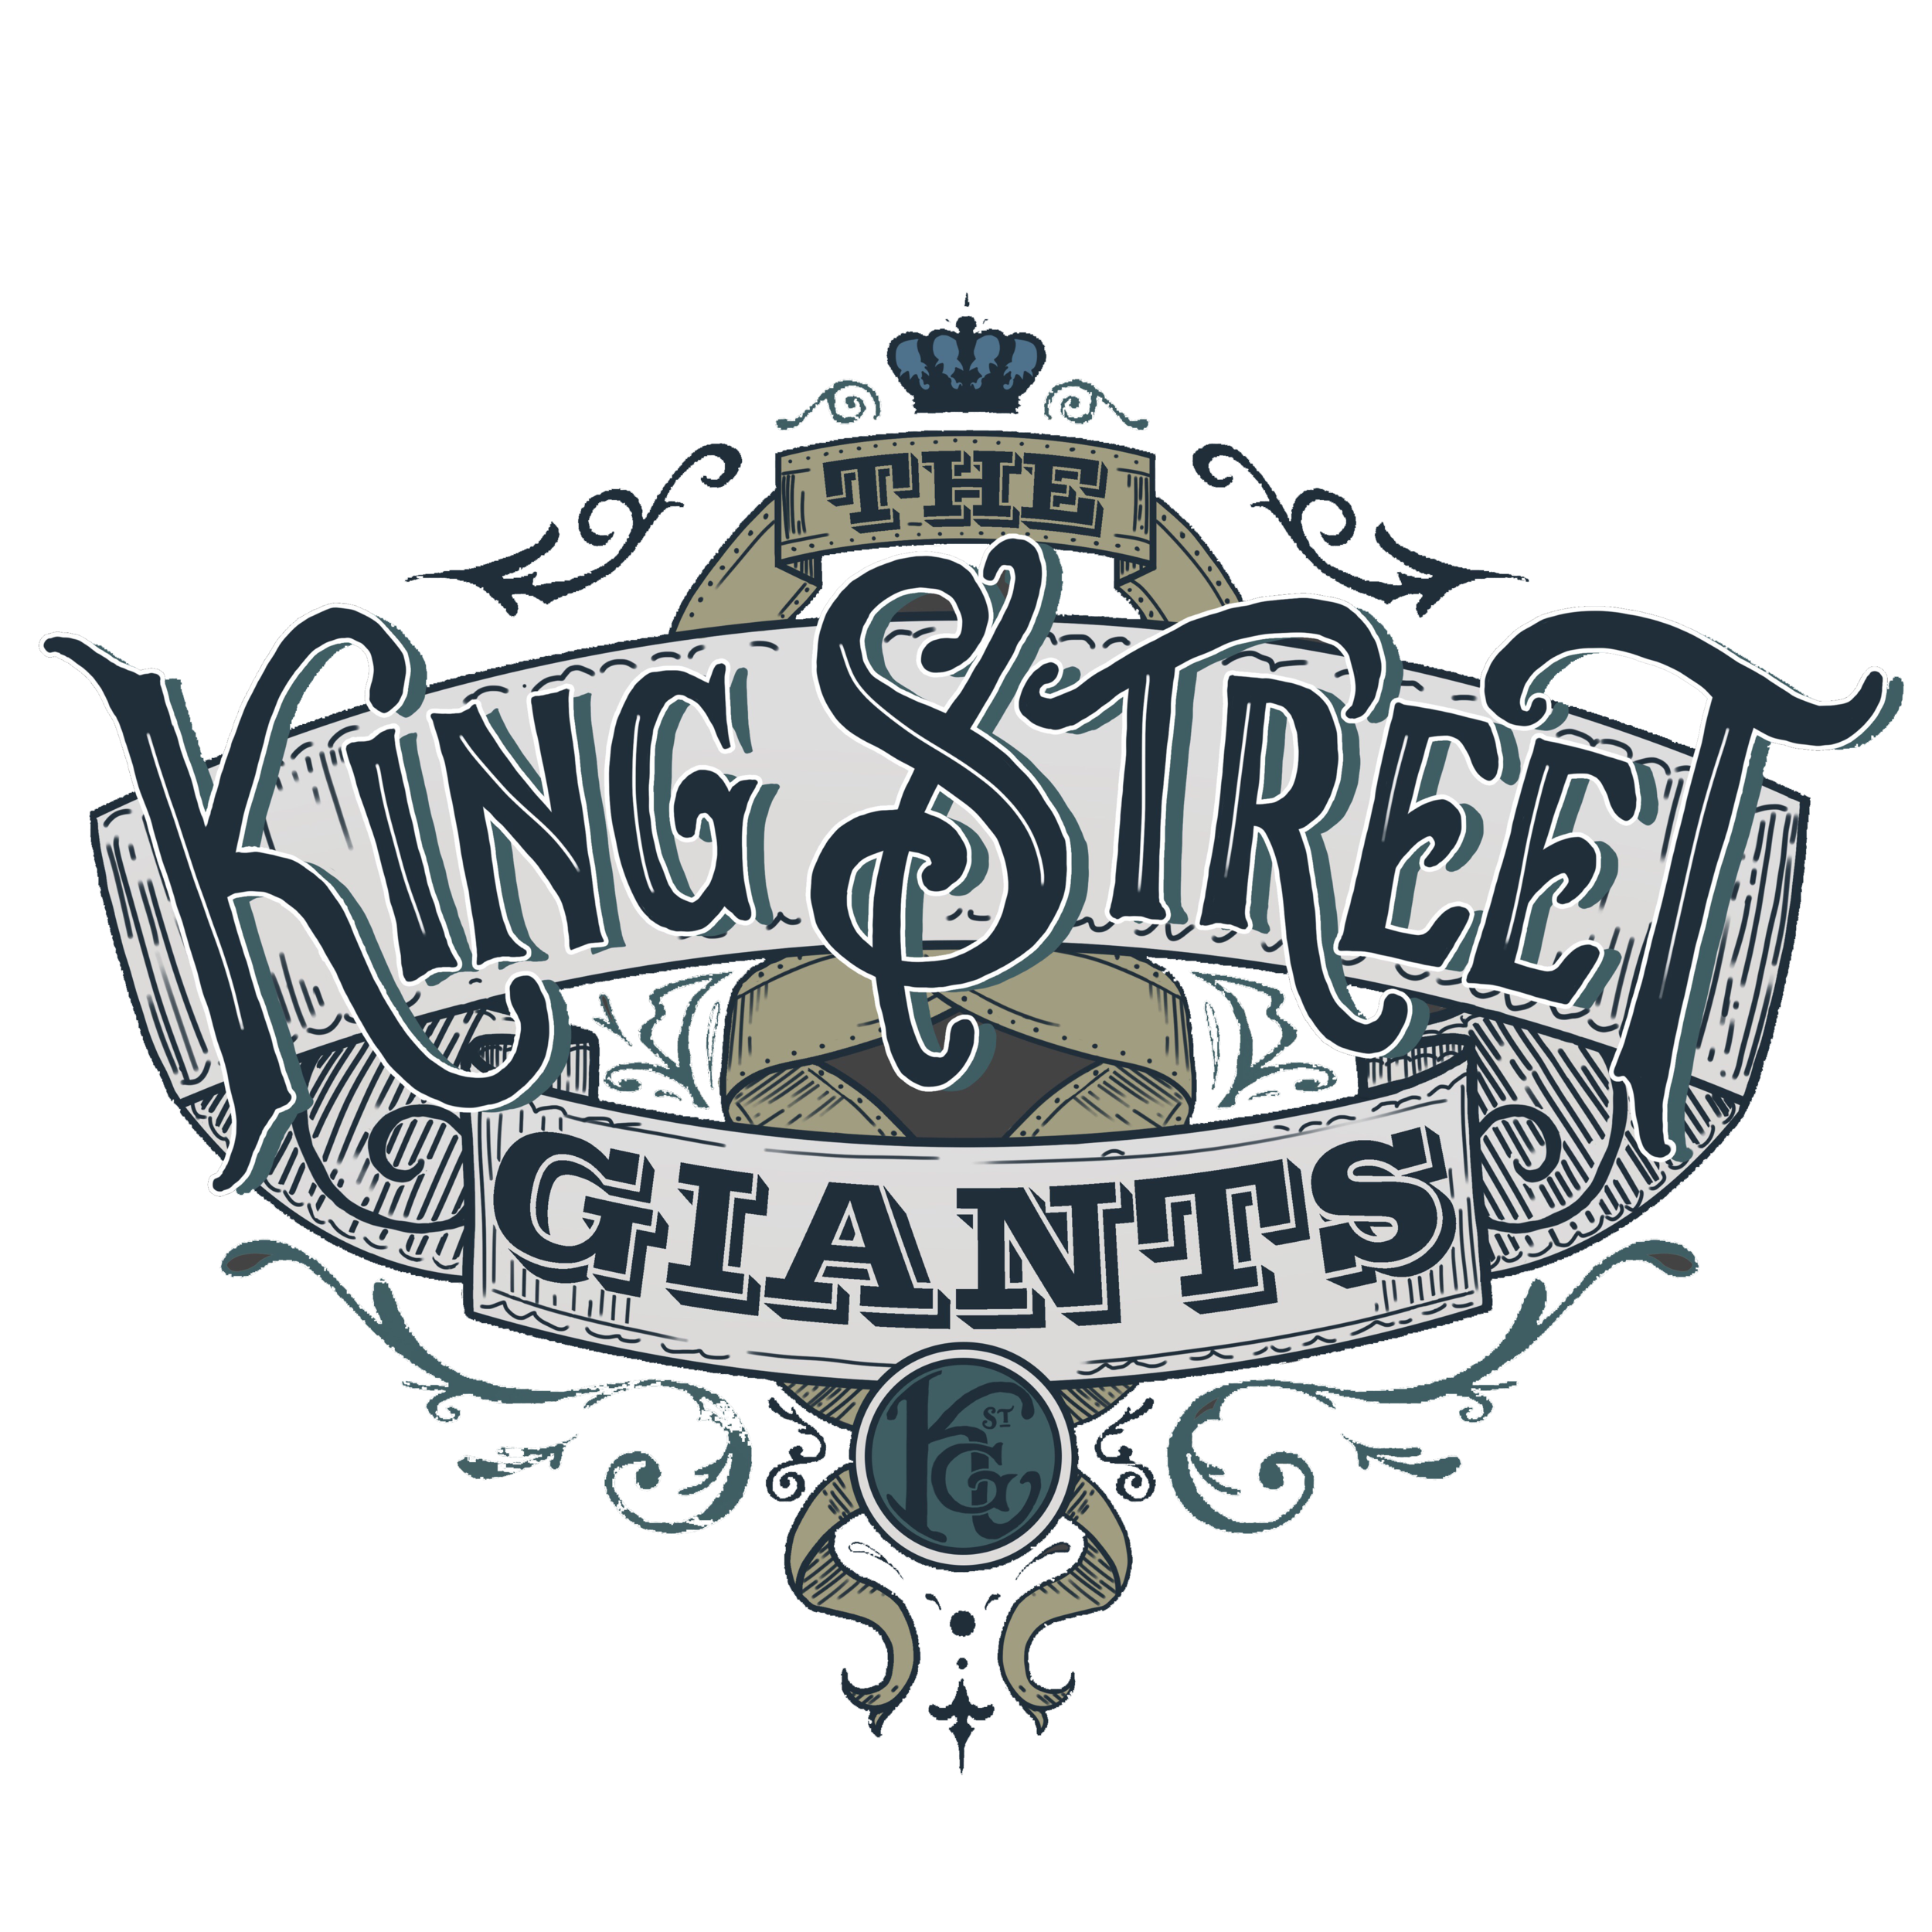 The King Street Giants